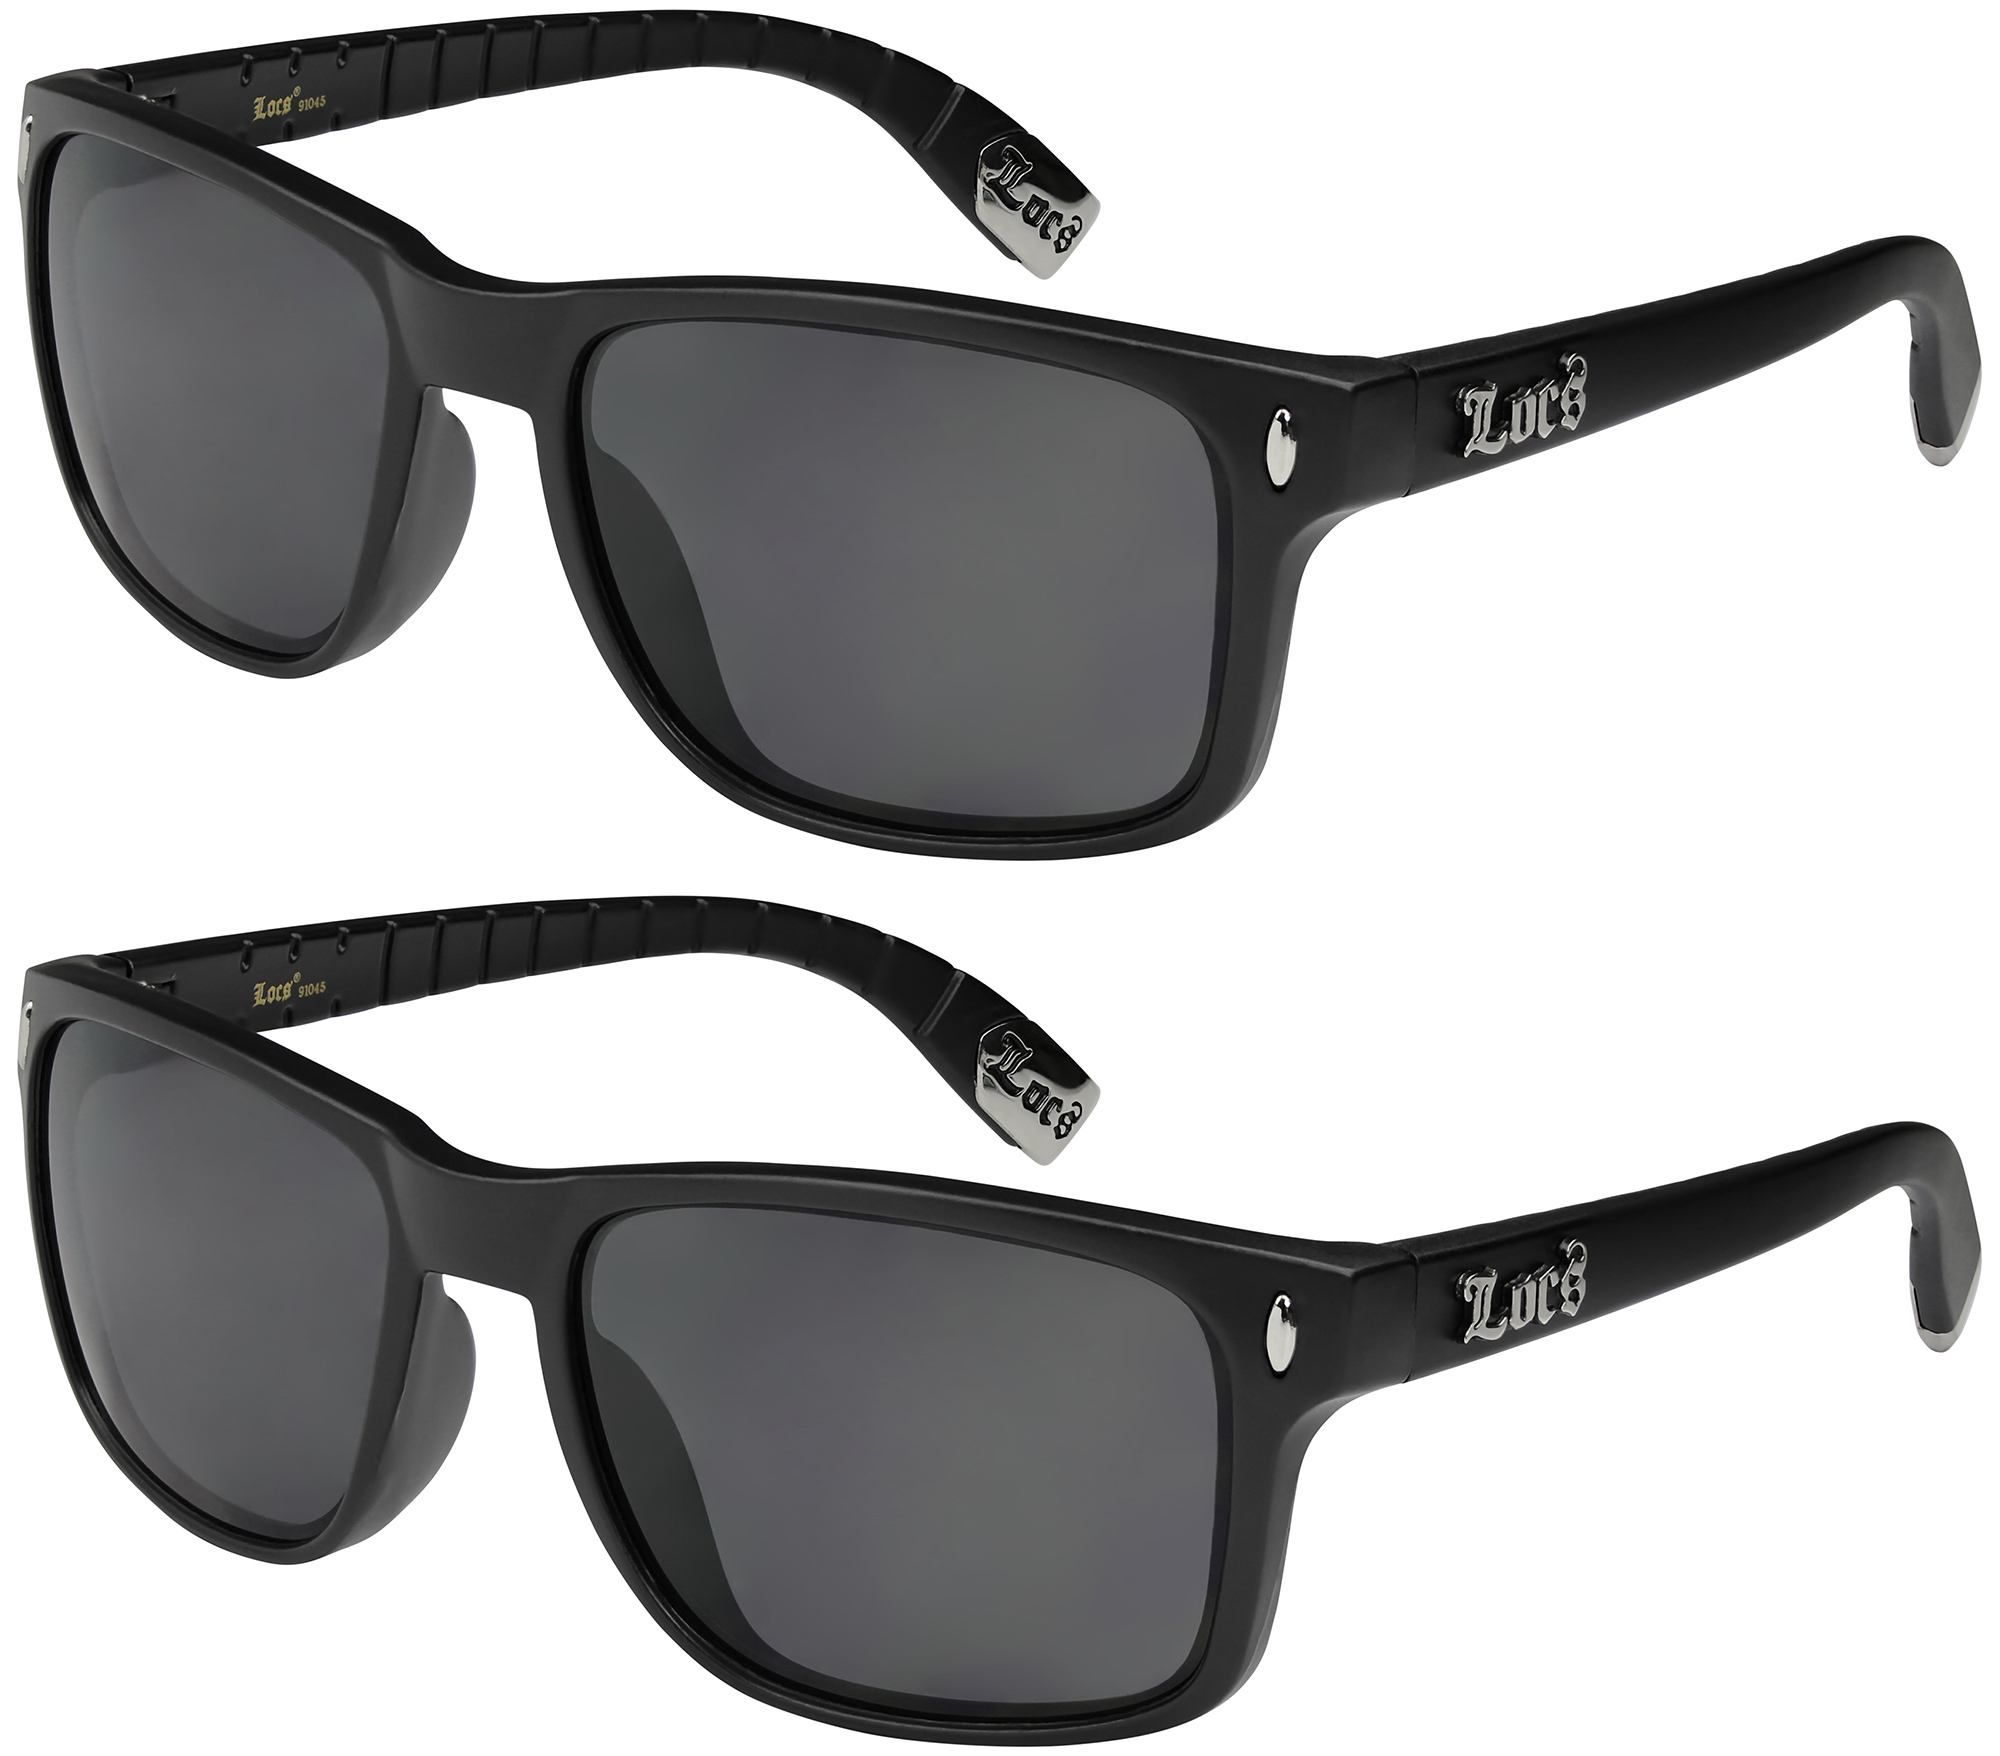 2er Pack Choppers 911 Locs Fahrradbrille Sonnenbrille Männer Frauen schwarz grau 